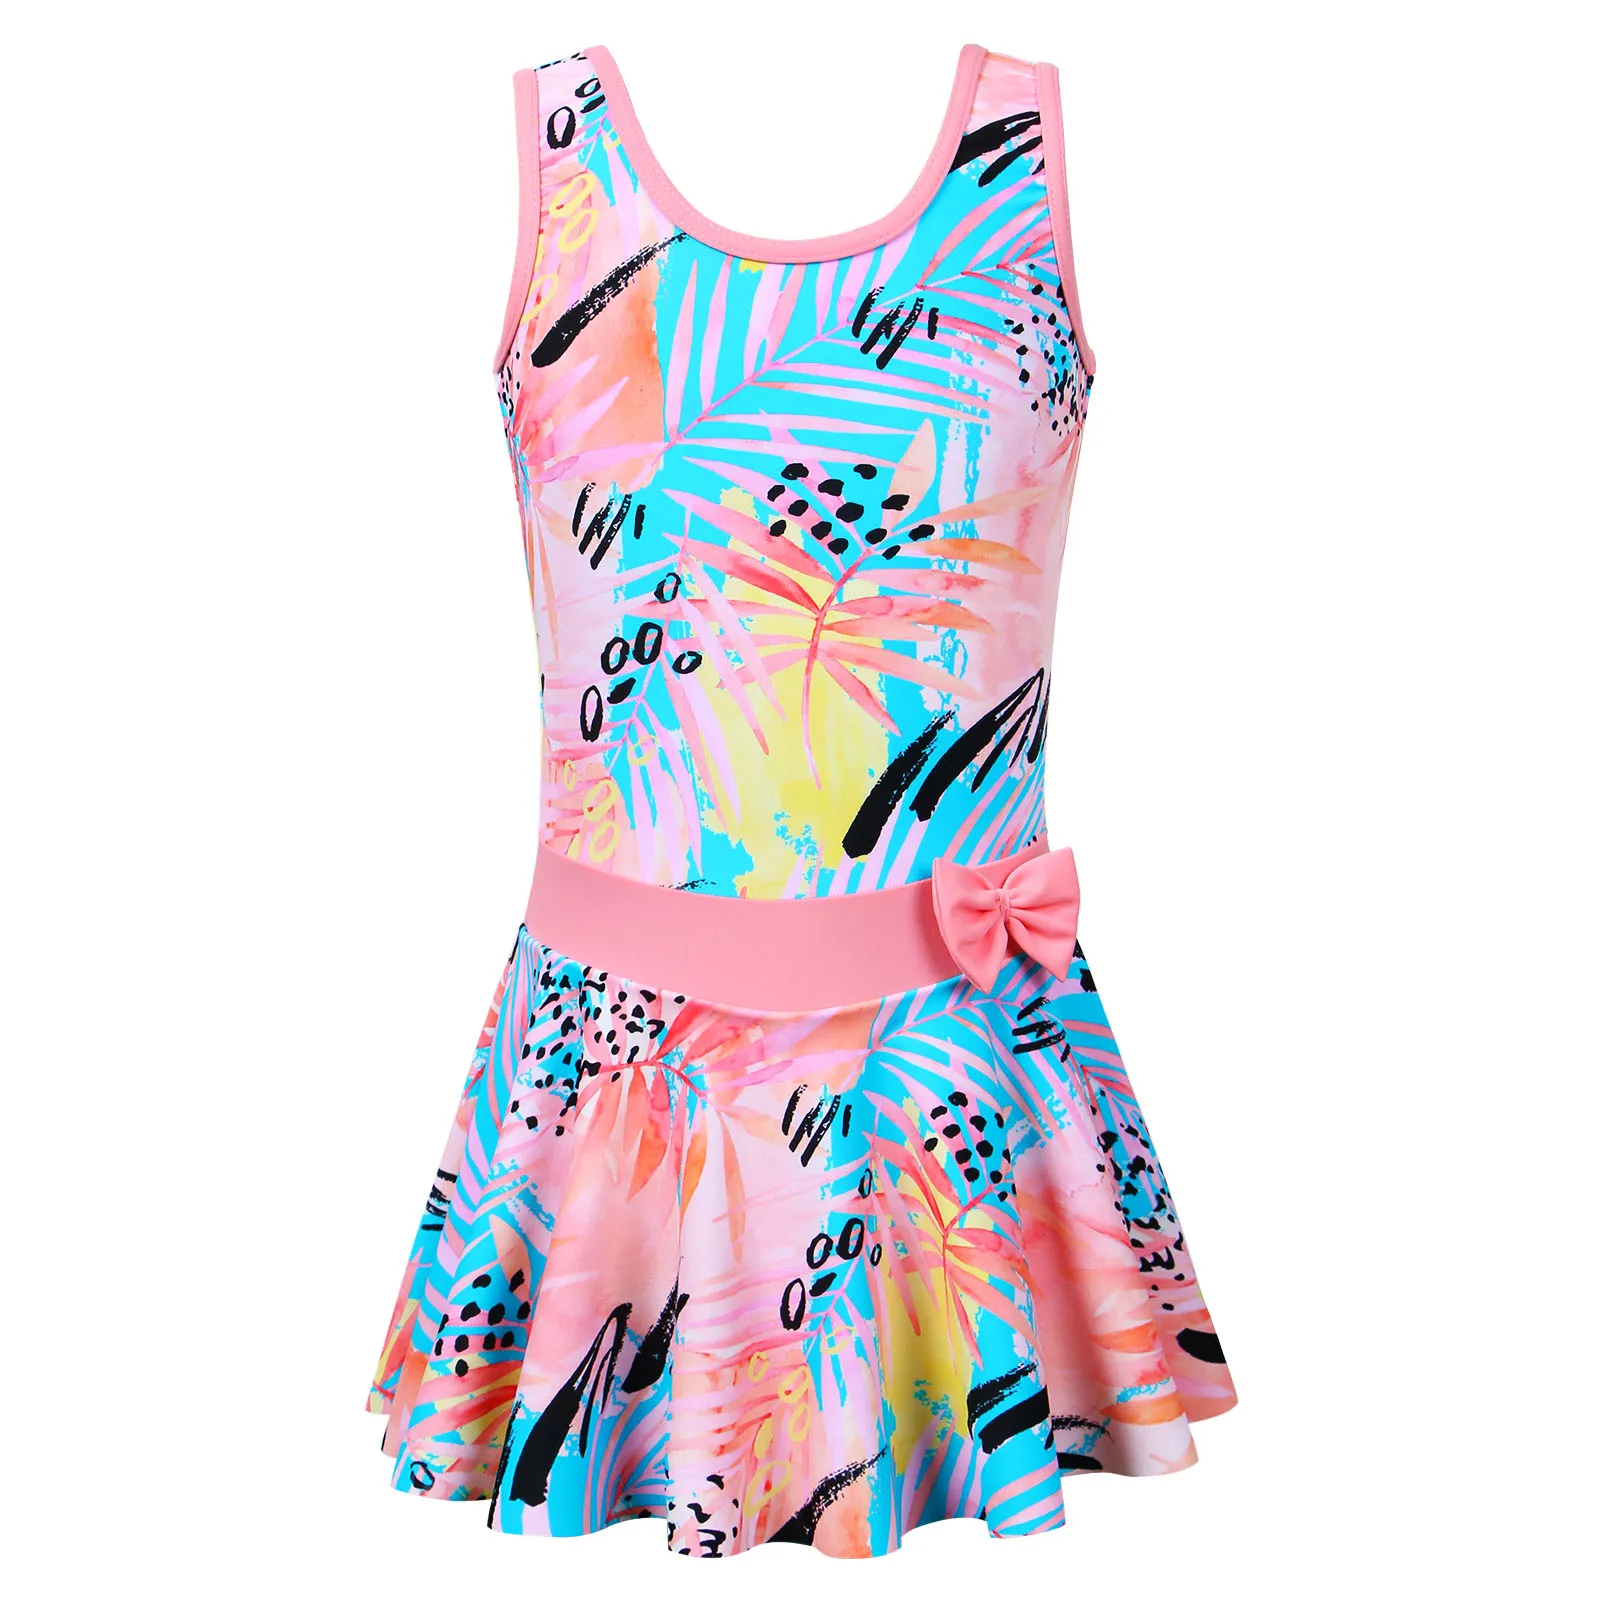 BAOHULU Toddler Girls Swimsuit One Piece Cute Floral Dress Swimwear Sleeveless Children Summer Beachwear Bathing Suit 1